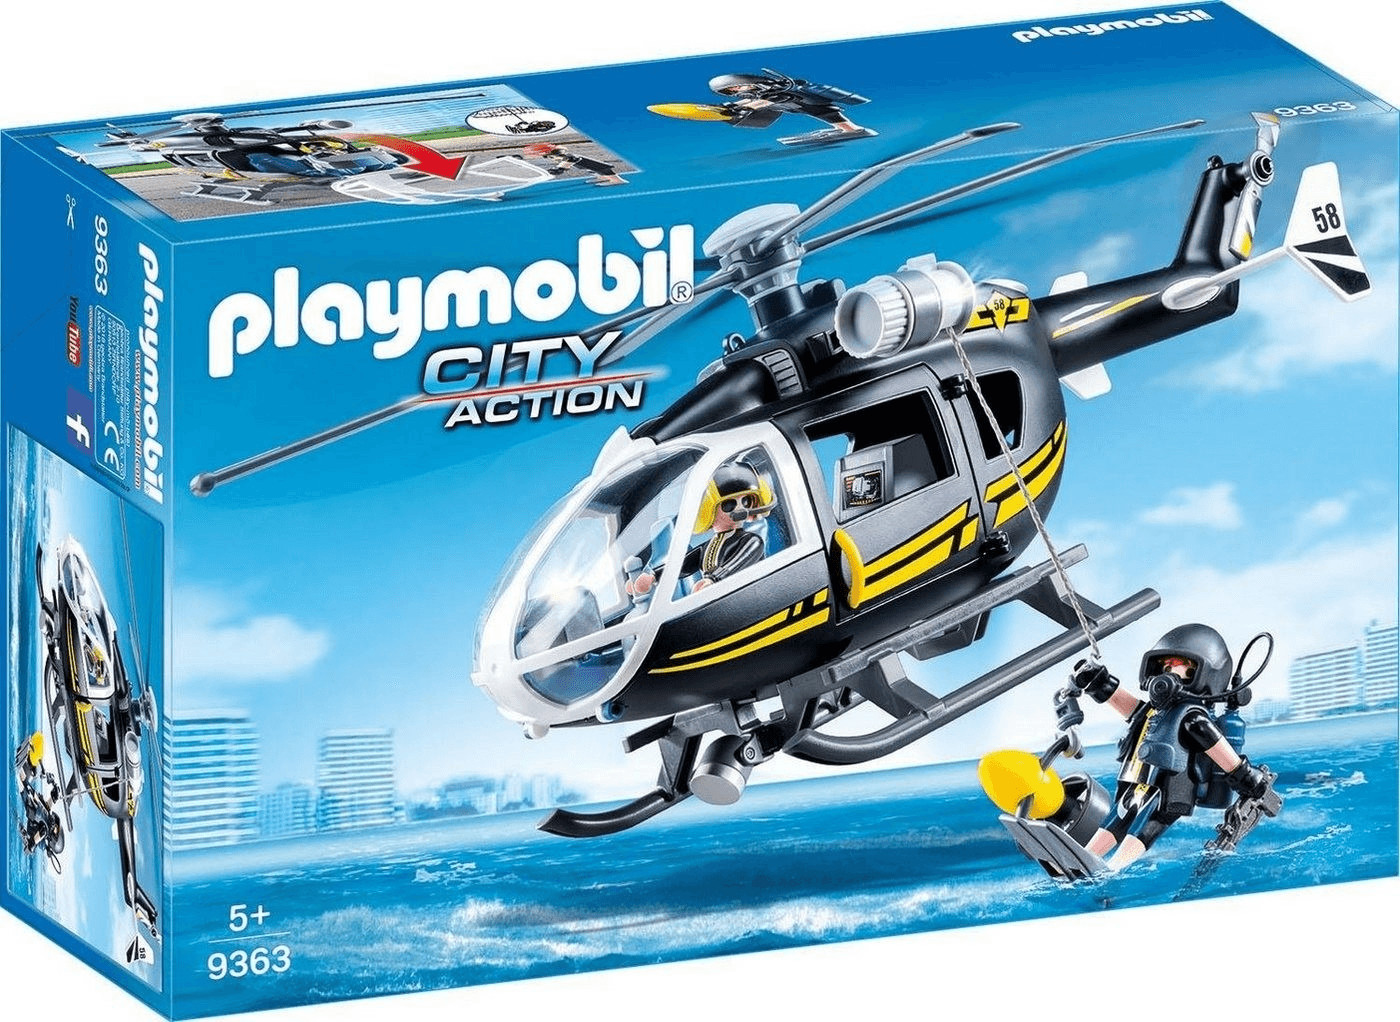 Playmobil City Action - SEK Helikopter (9363)